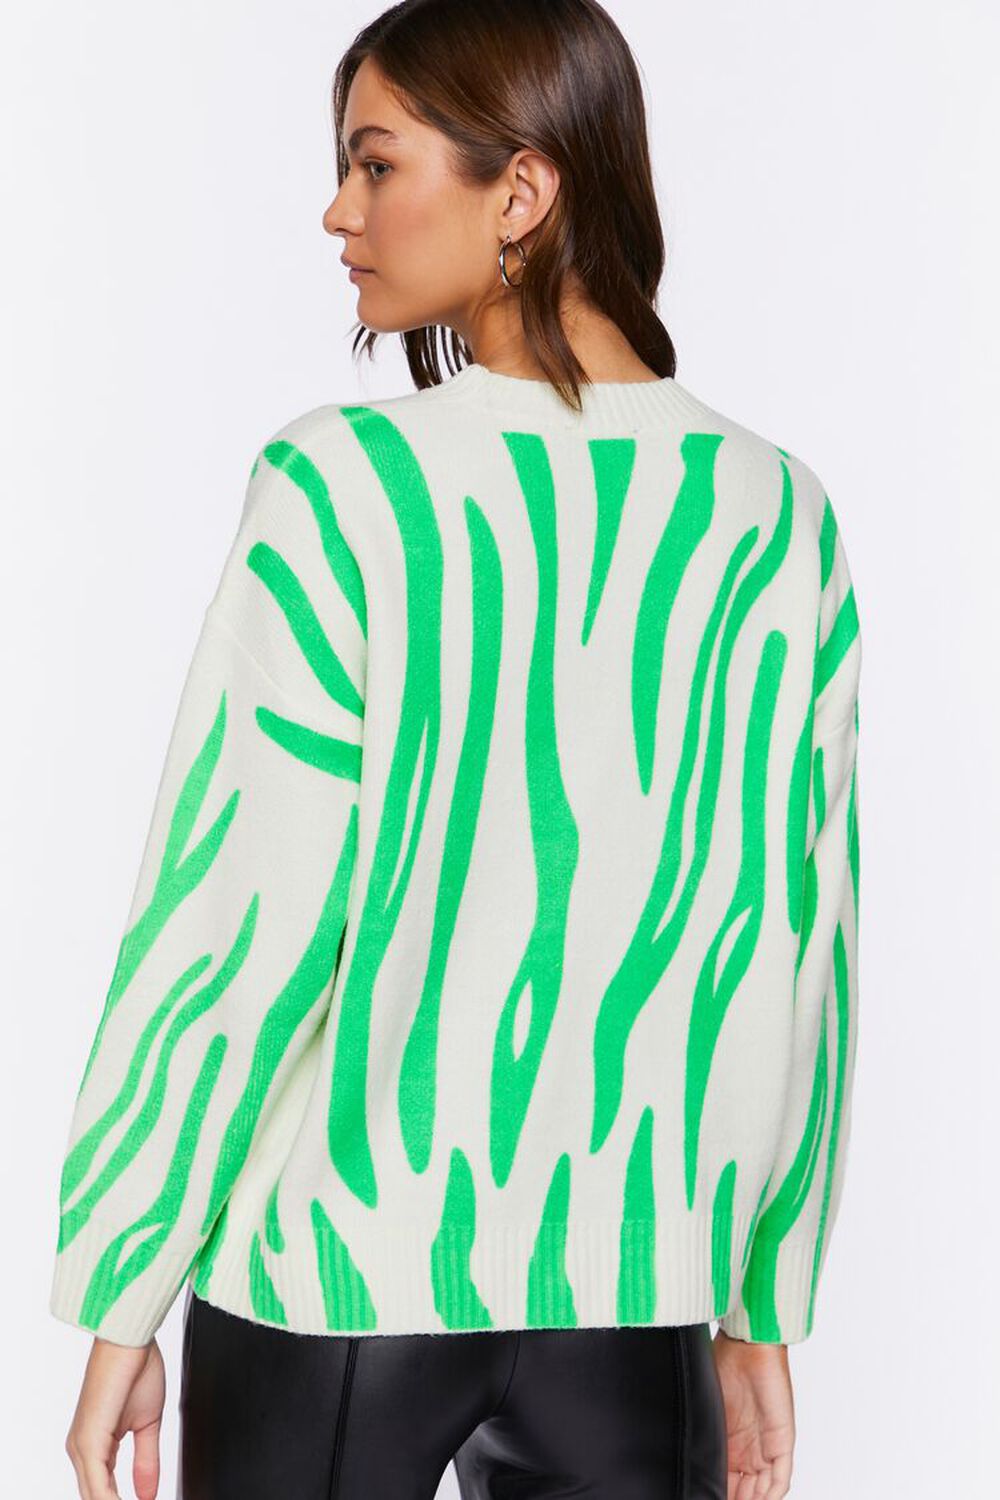 CREAM/GREEN Abstract Print Crew Neck Sweater, image 3